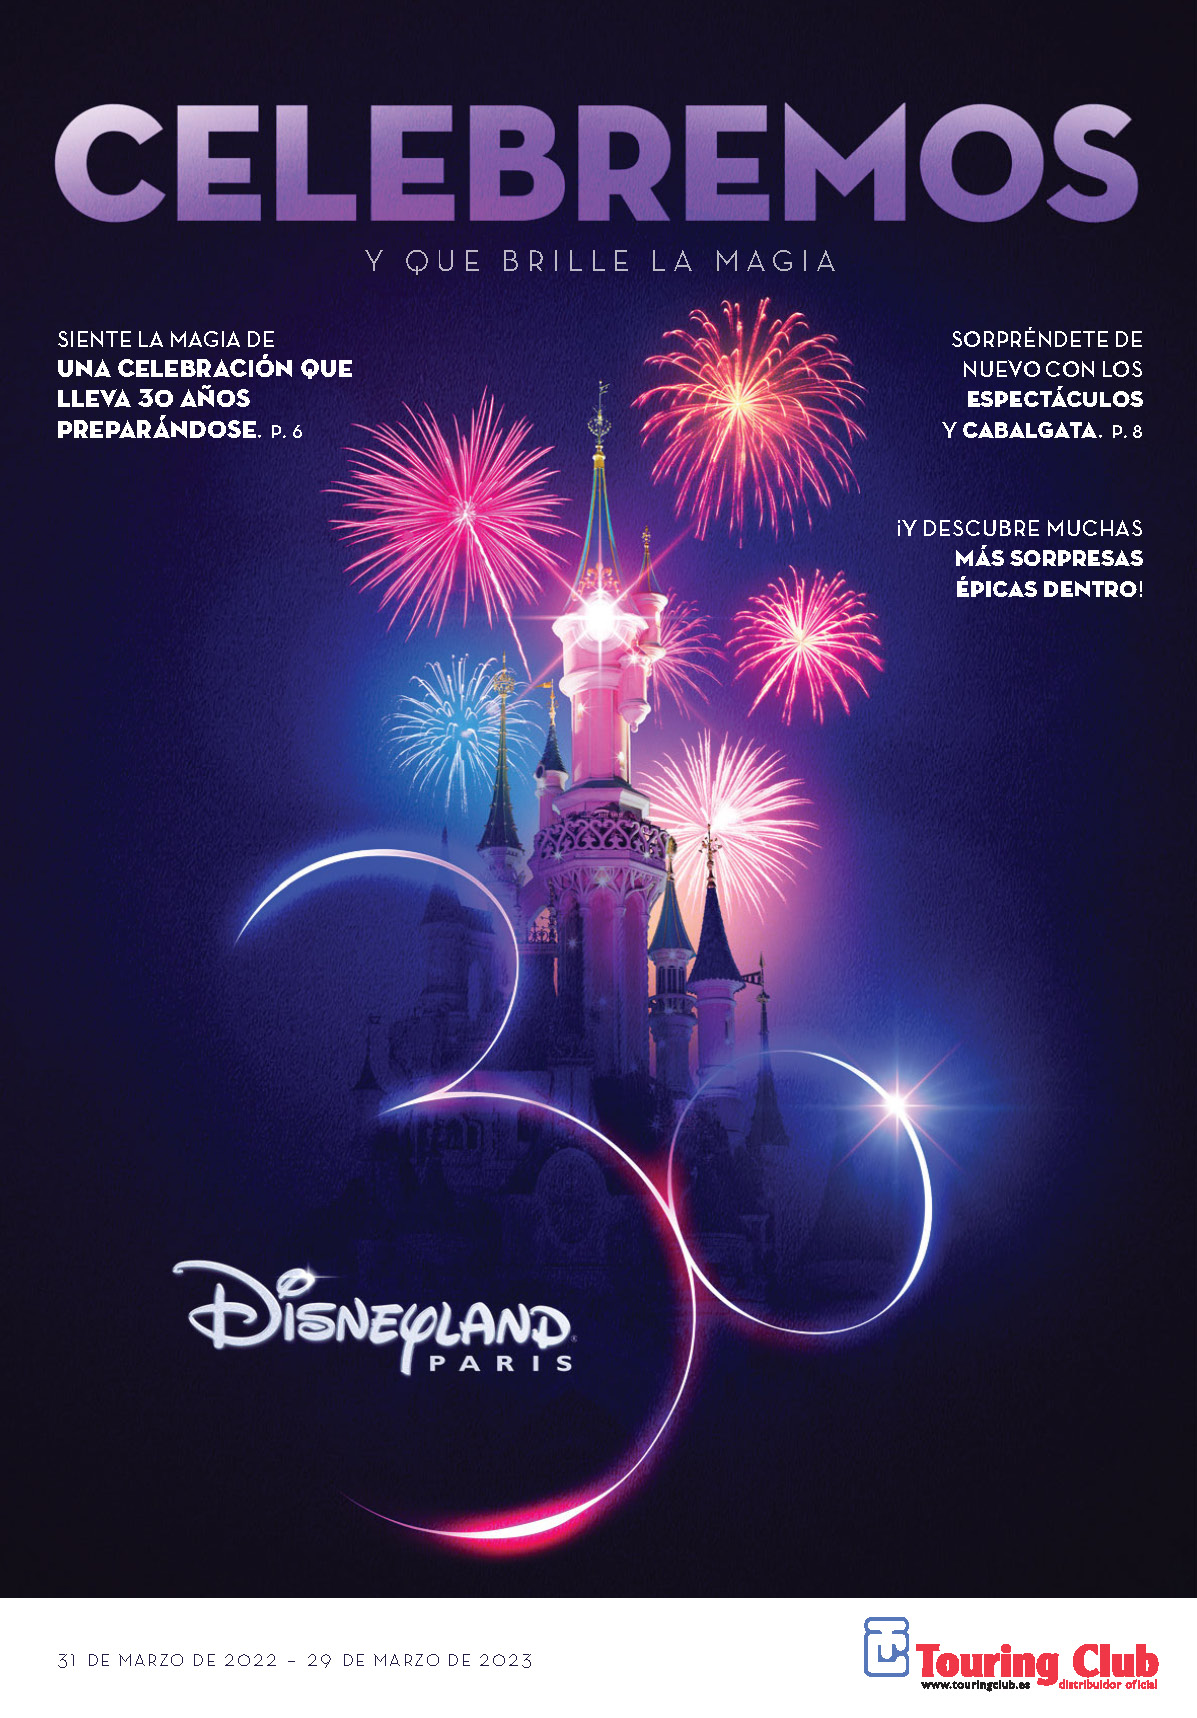 Catalogo Touring Clug Disneyland Paris 2022-2023 30 aniversario